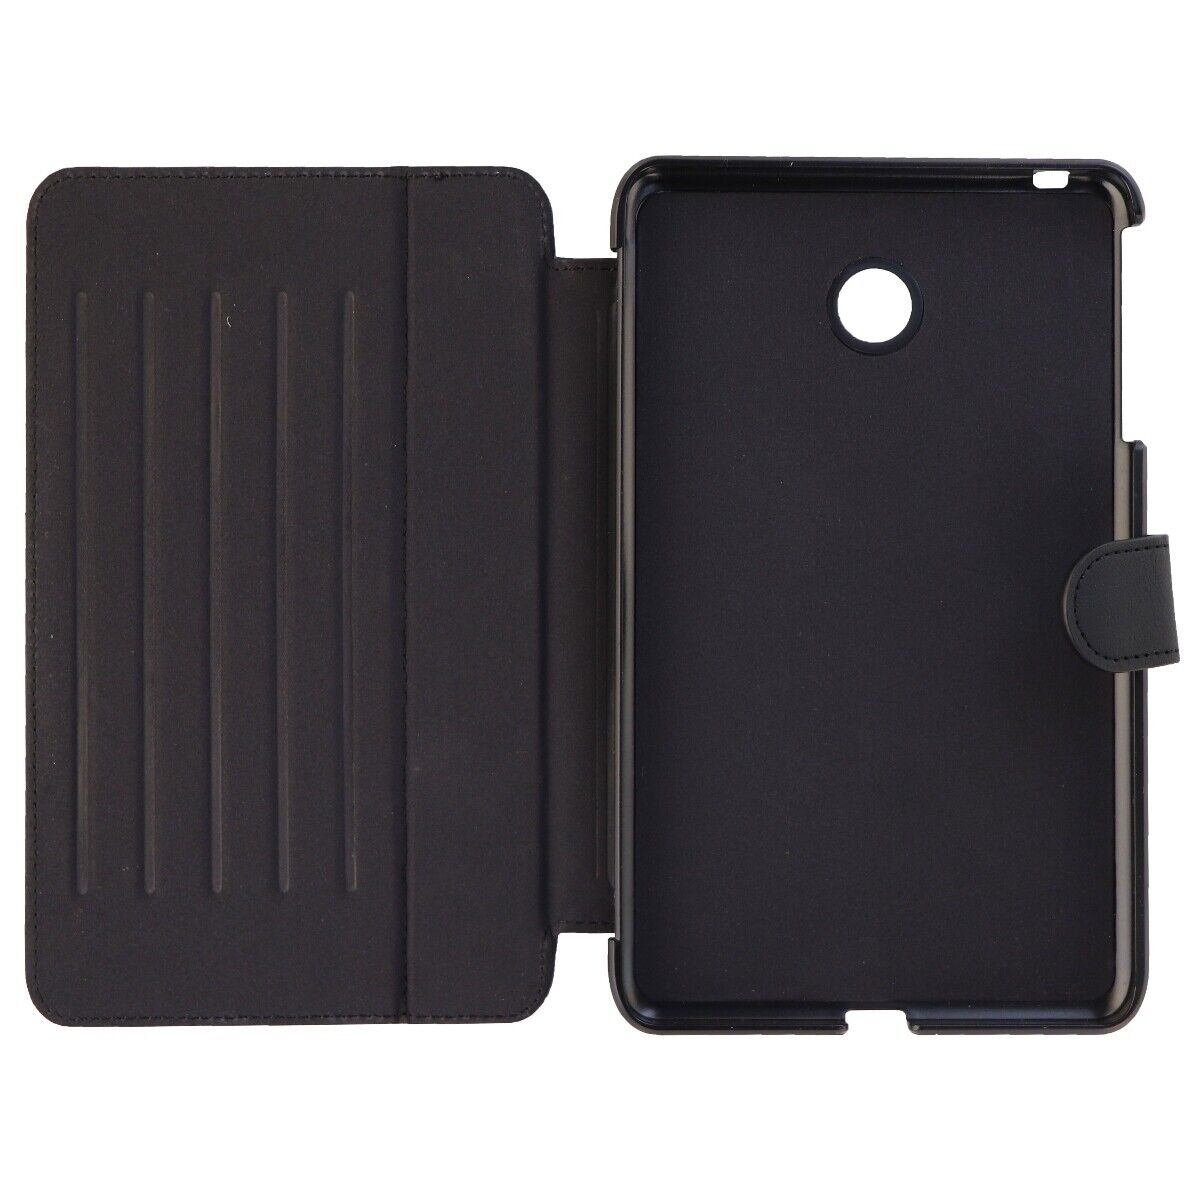 OEM Fit Folio Protective Cover for Verizon Ellipsis 8 - Black